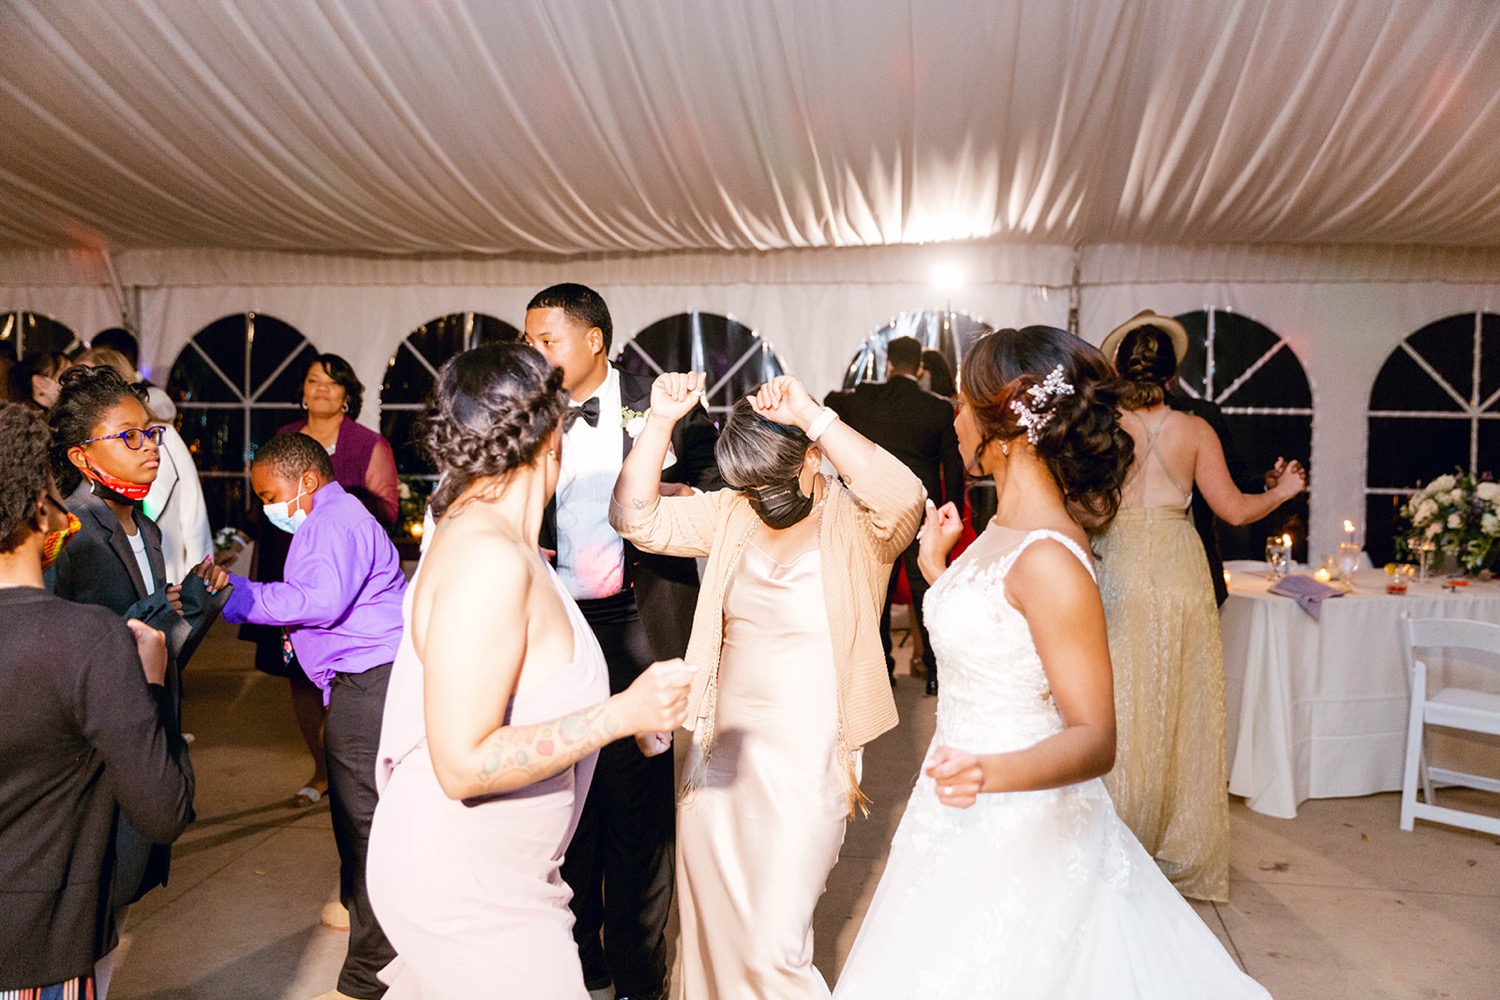 guests partying dancing wedding reception